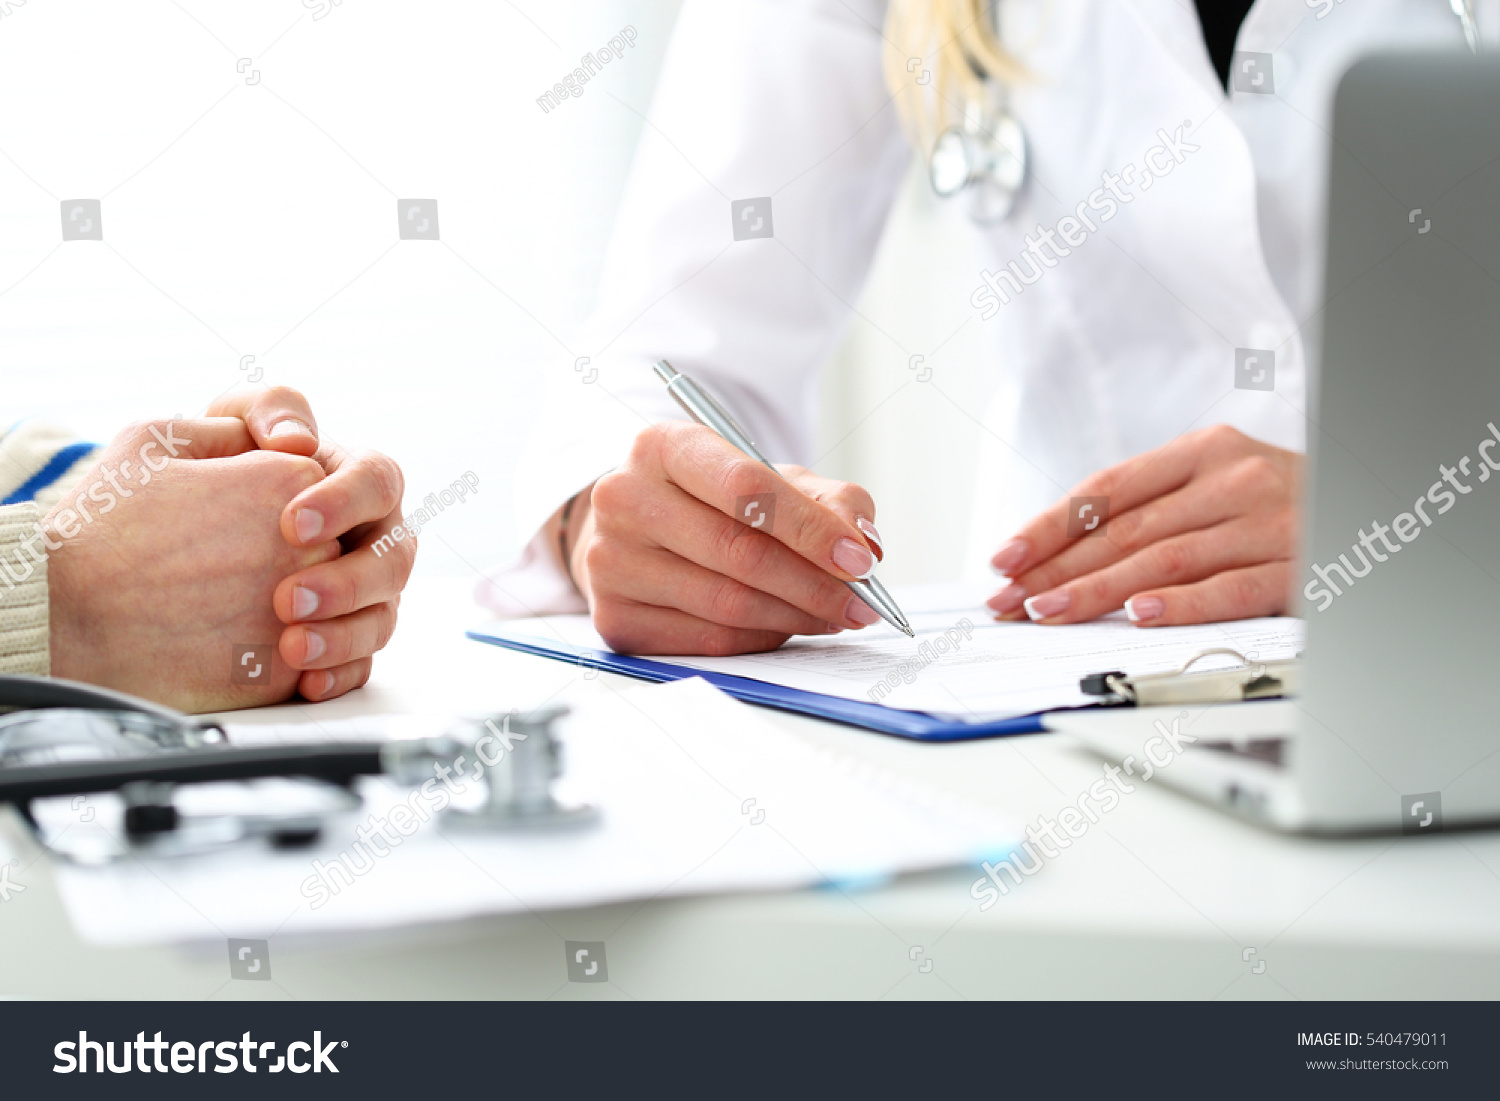 Female Doctor Hand Hold Silver Pen Stock Photo 540479011 - Shutterstock-8248